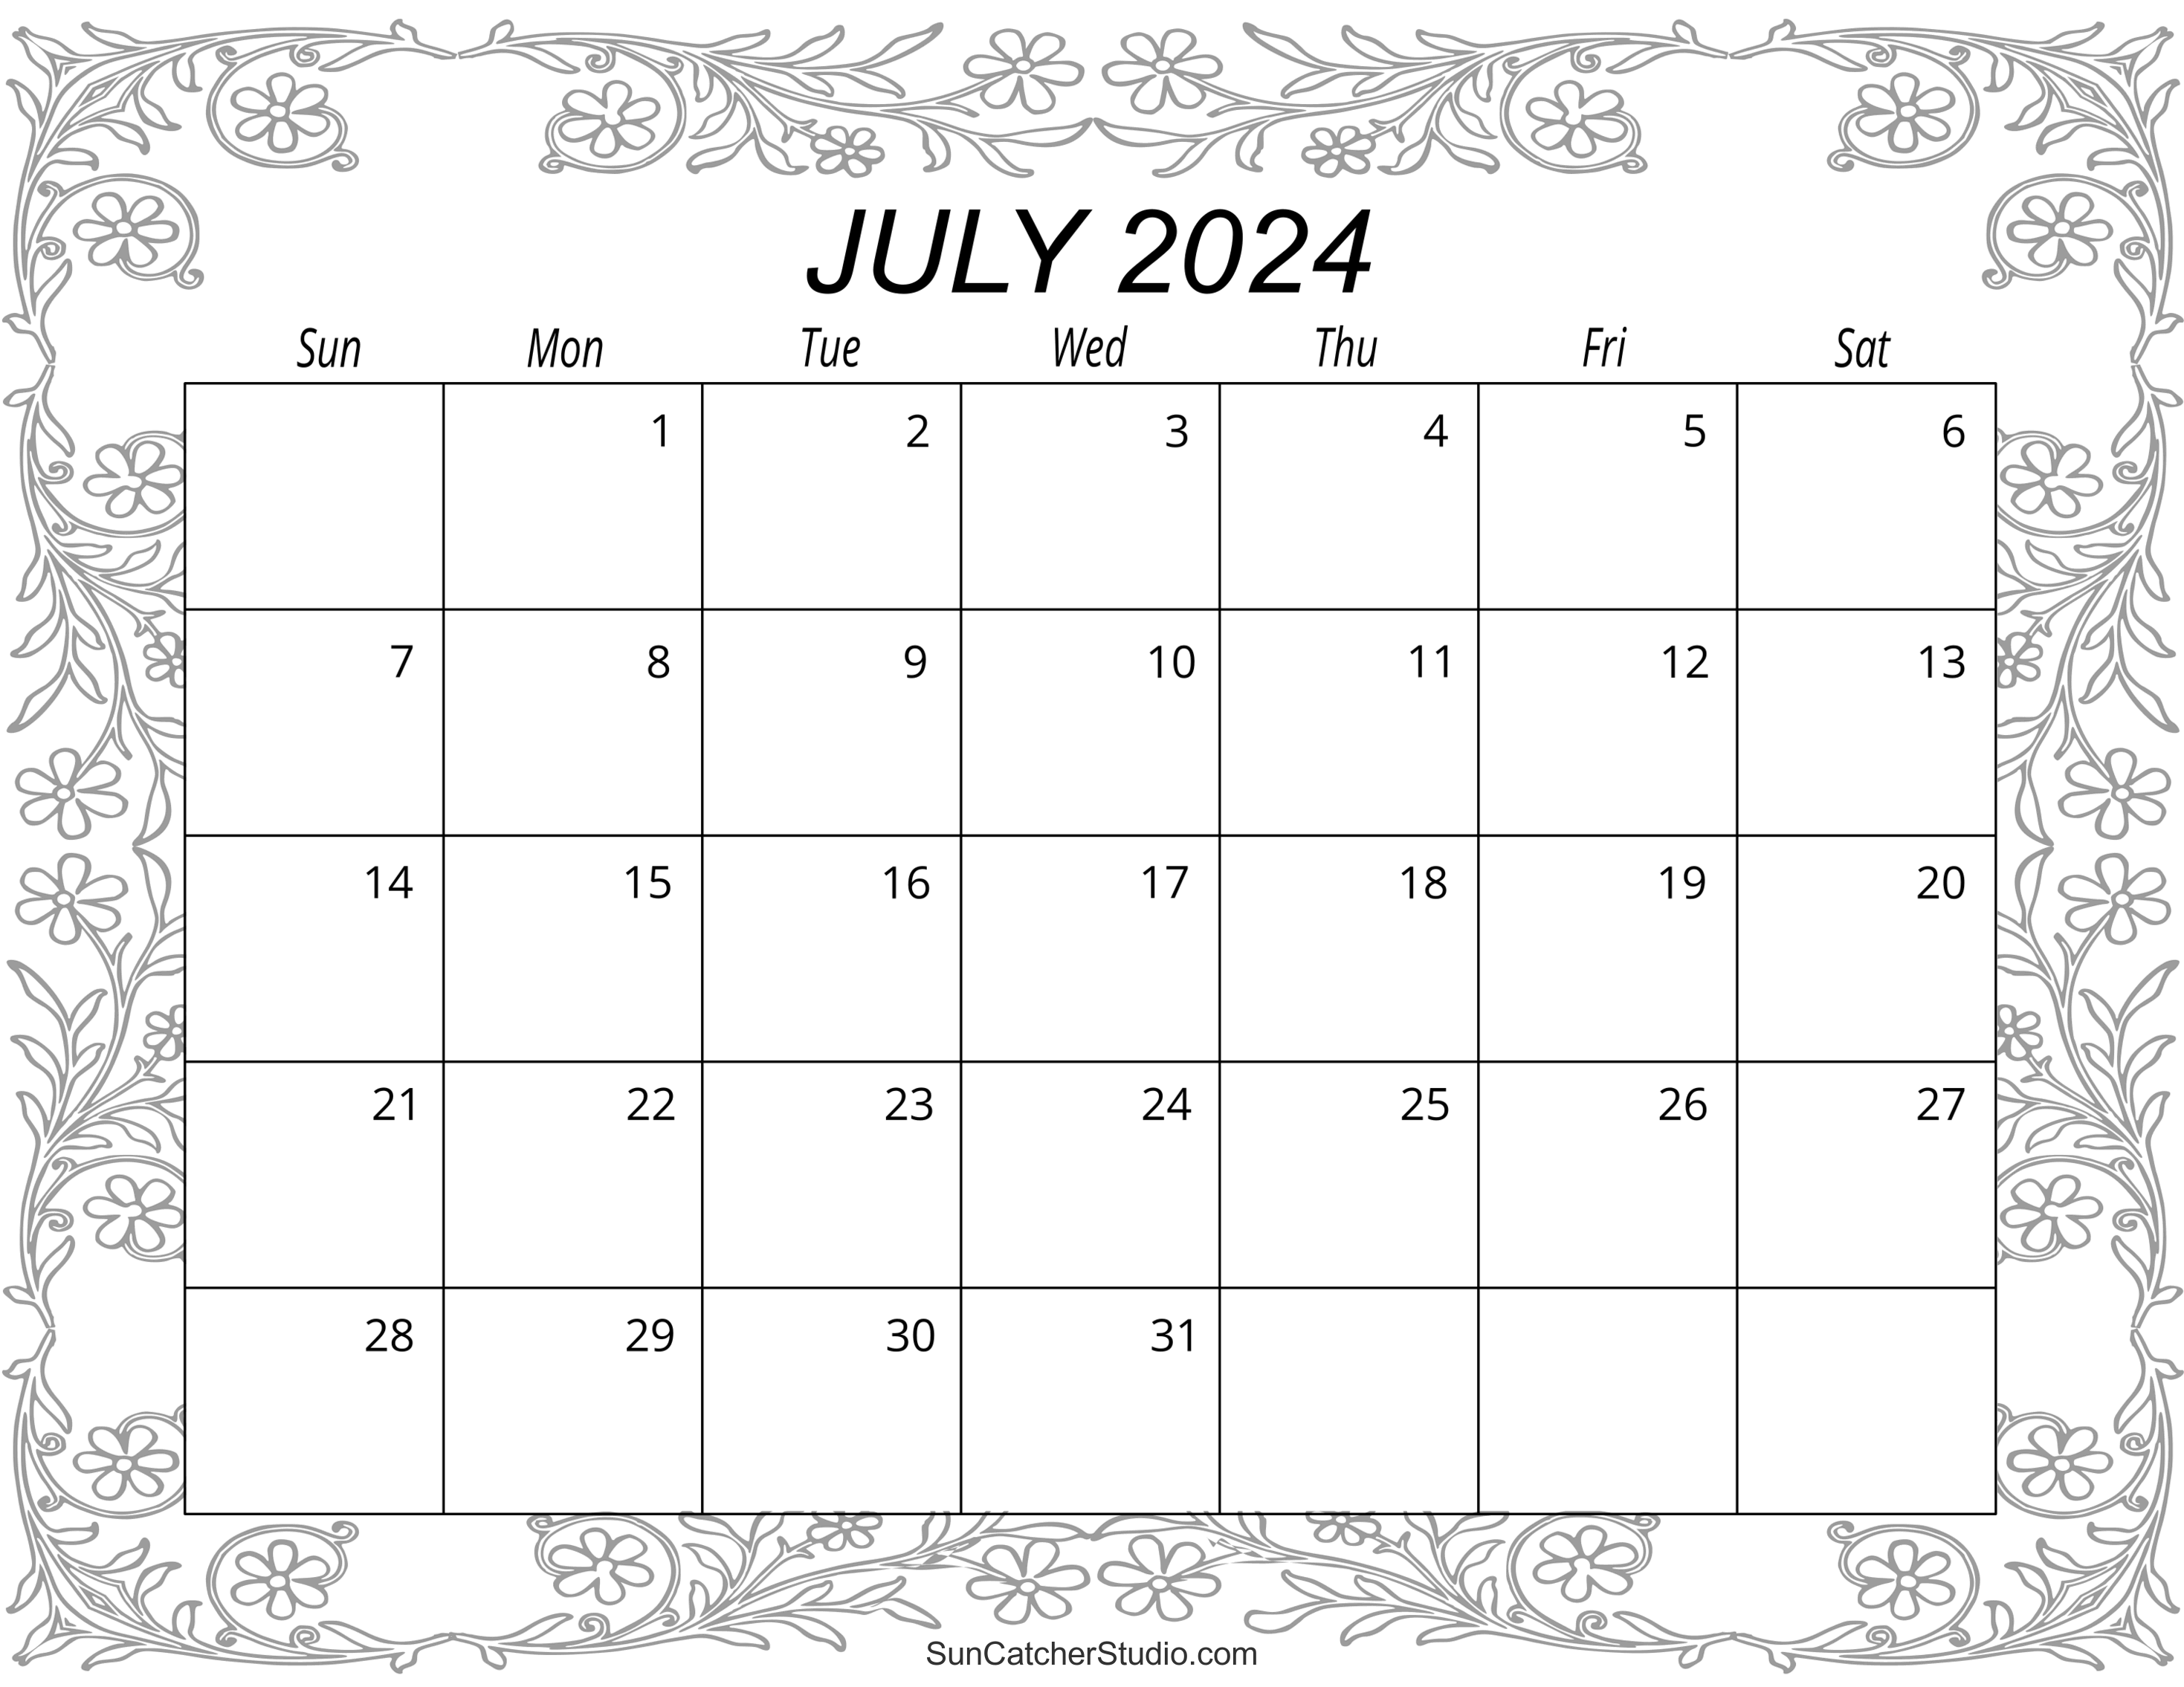 July 2024 Calendar (Free Printable) DIY Projects, Patterns, Monograms